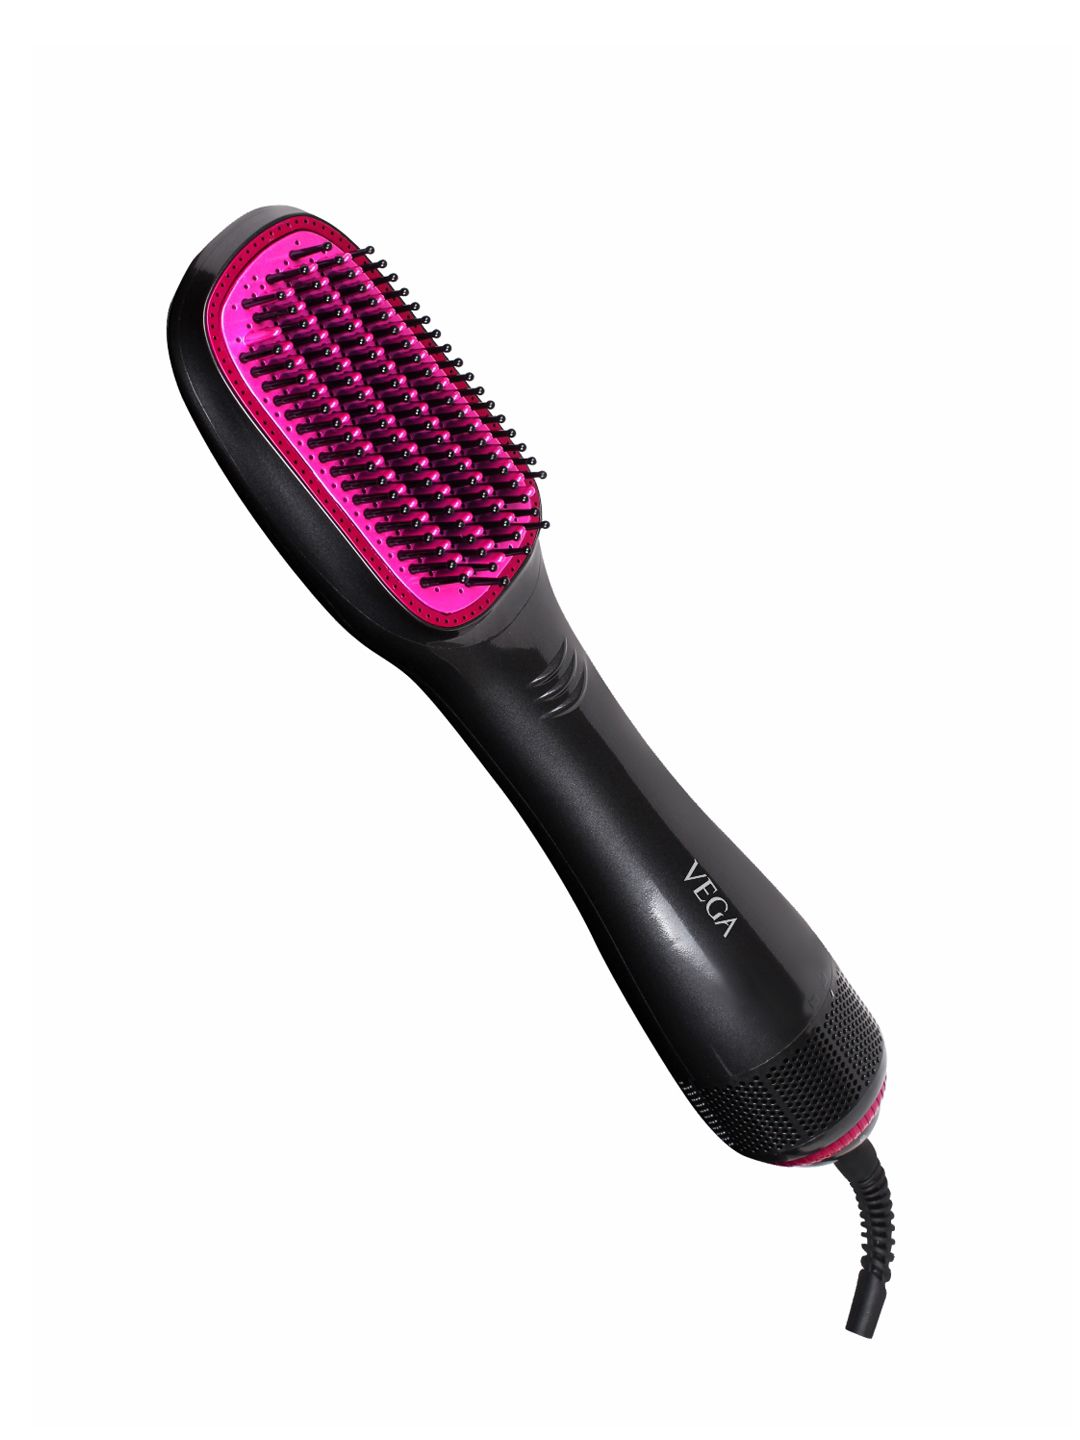 VEGA VHSD-01 Multi-Styler Brush & Hair Dryer with Keratin Infused Bristles - Black & Pink Price in India